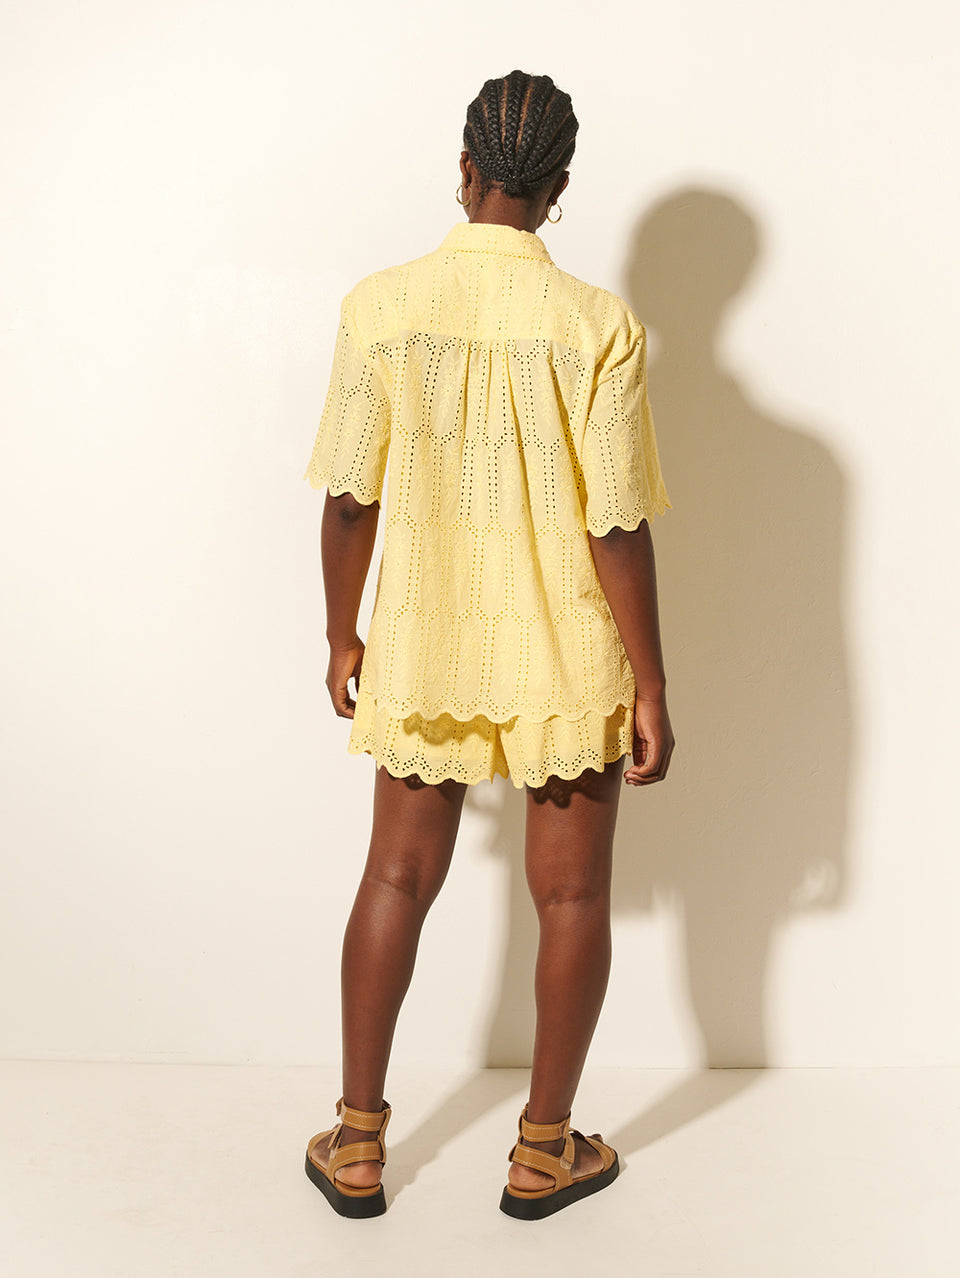 Estelle Shirt KIVARI | Model wears yellow shirt back view